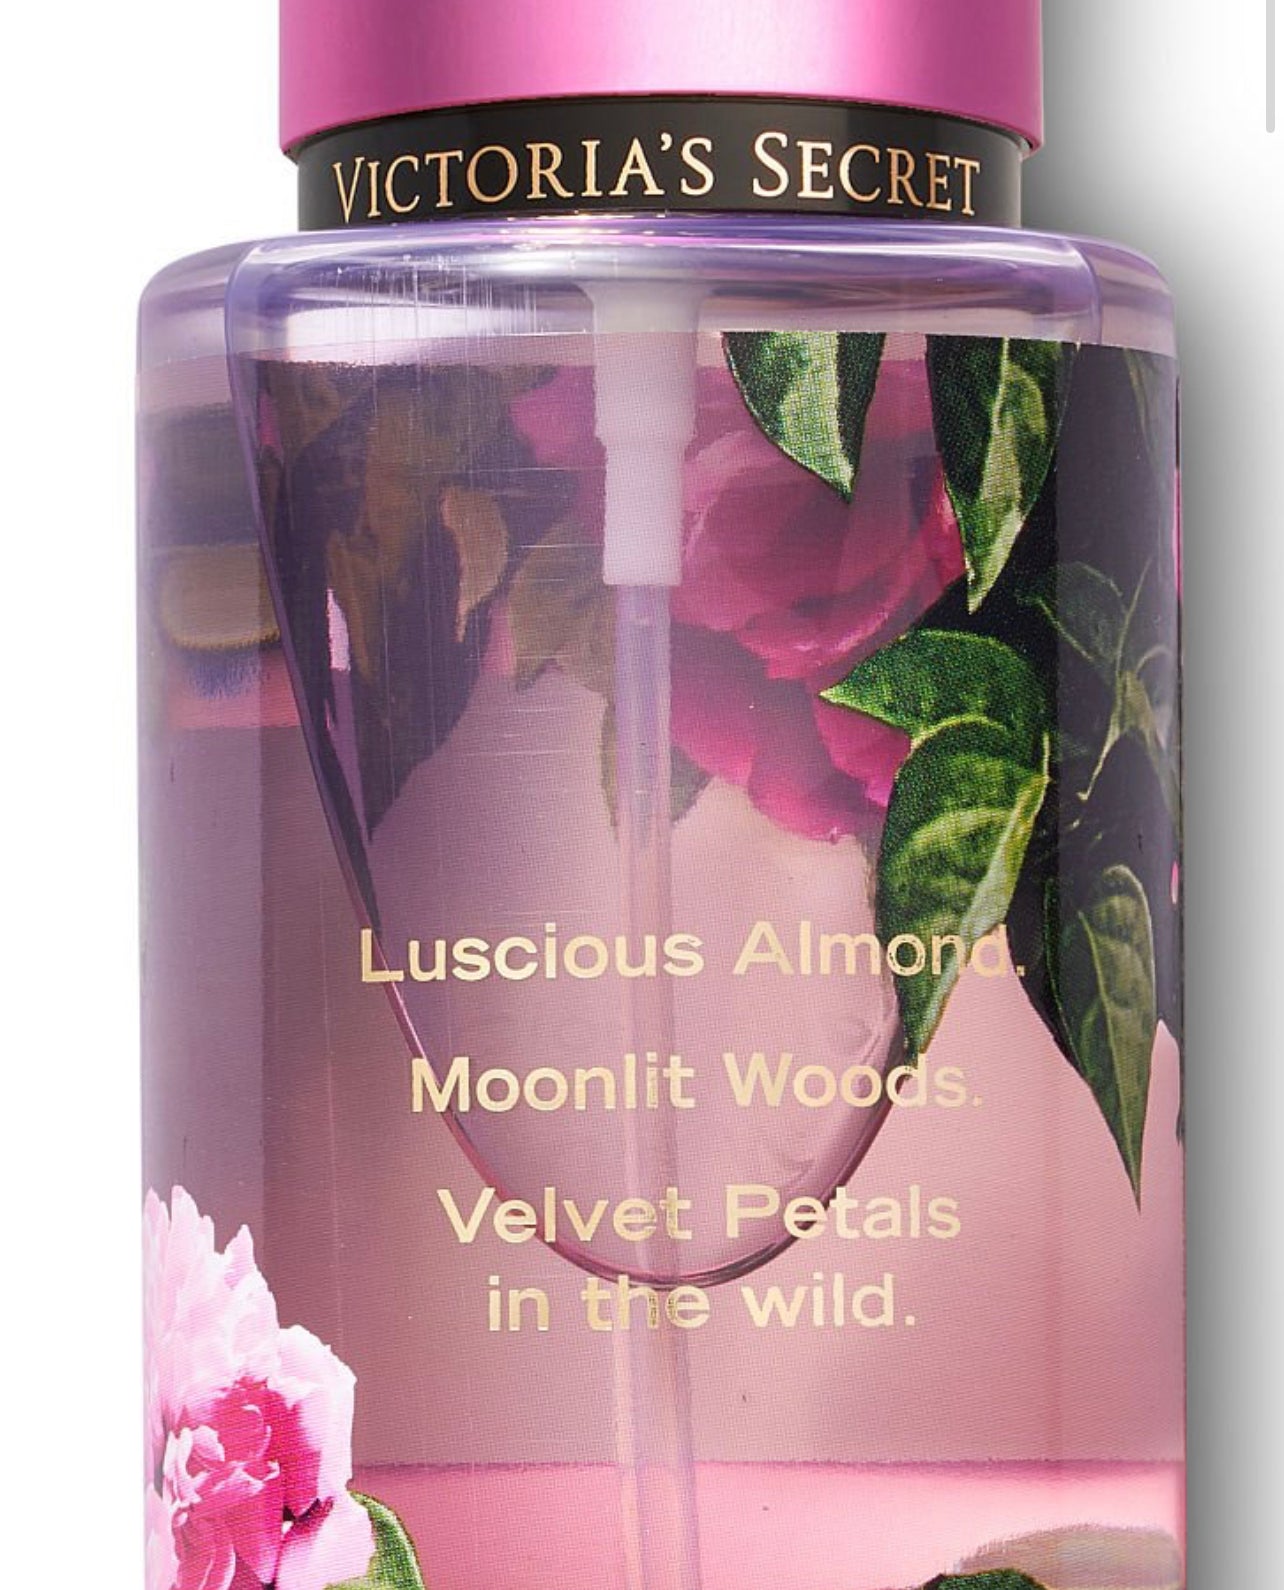 ,,Victoria’s Secret Velvet Petals” Body Mist